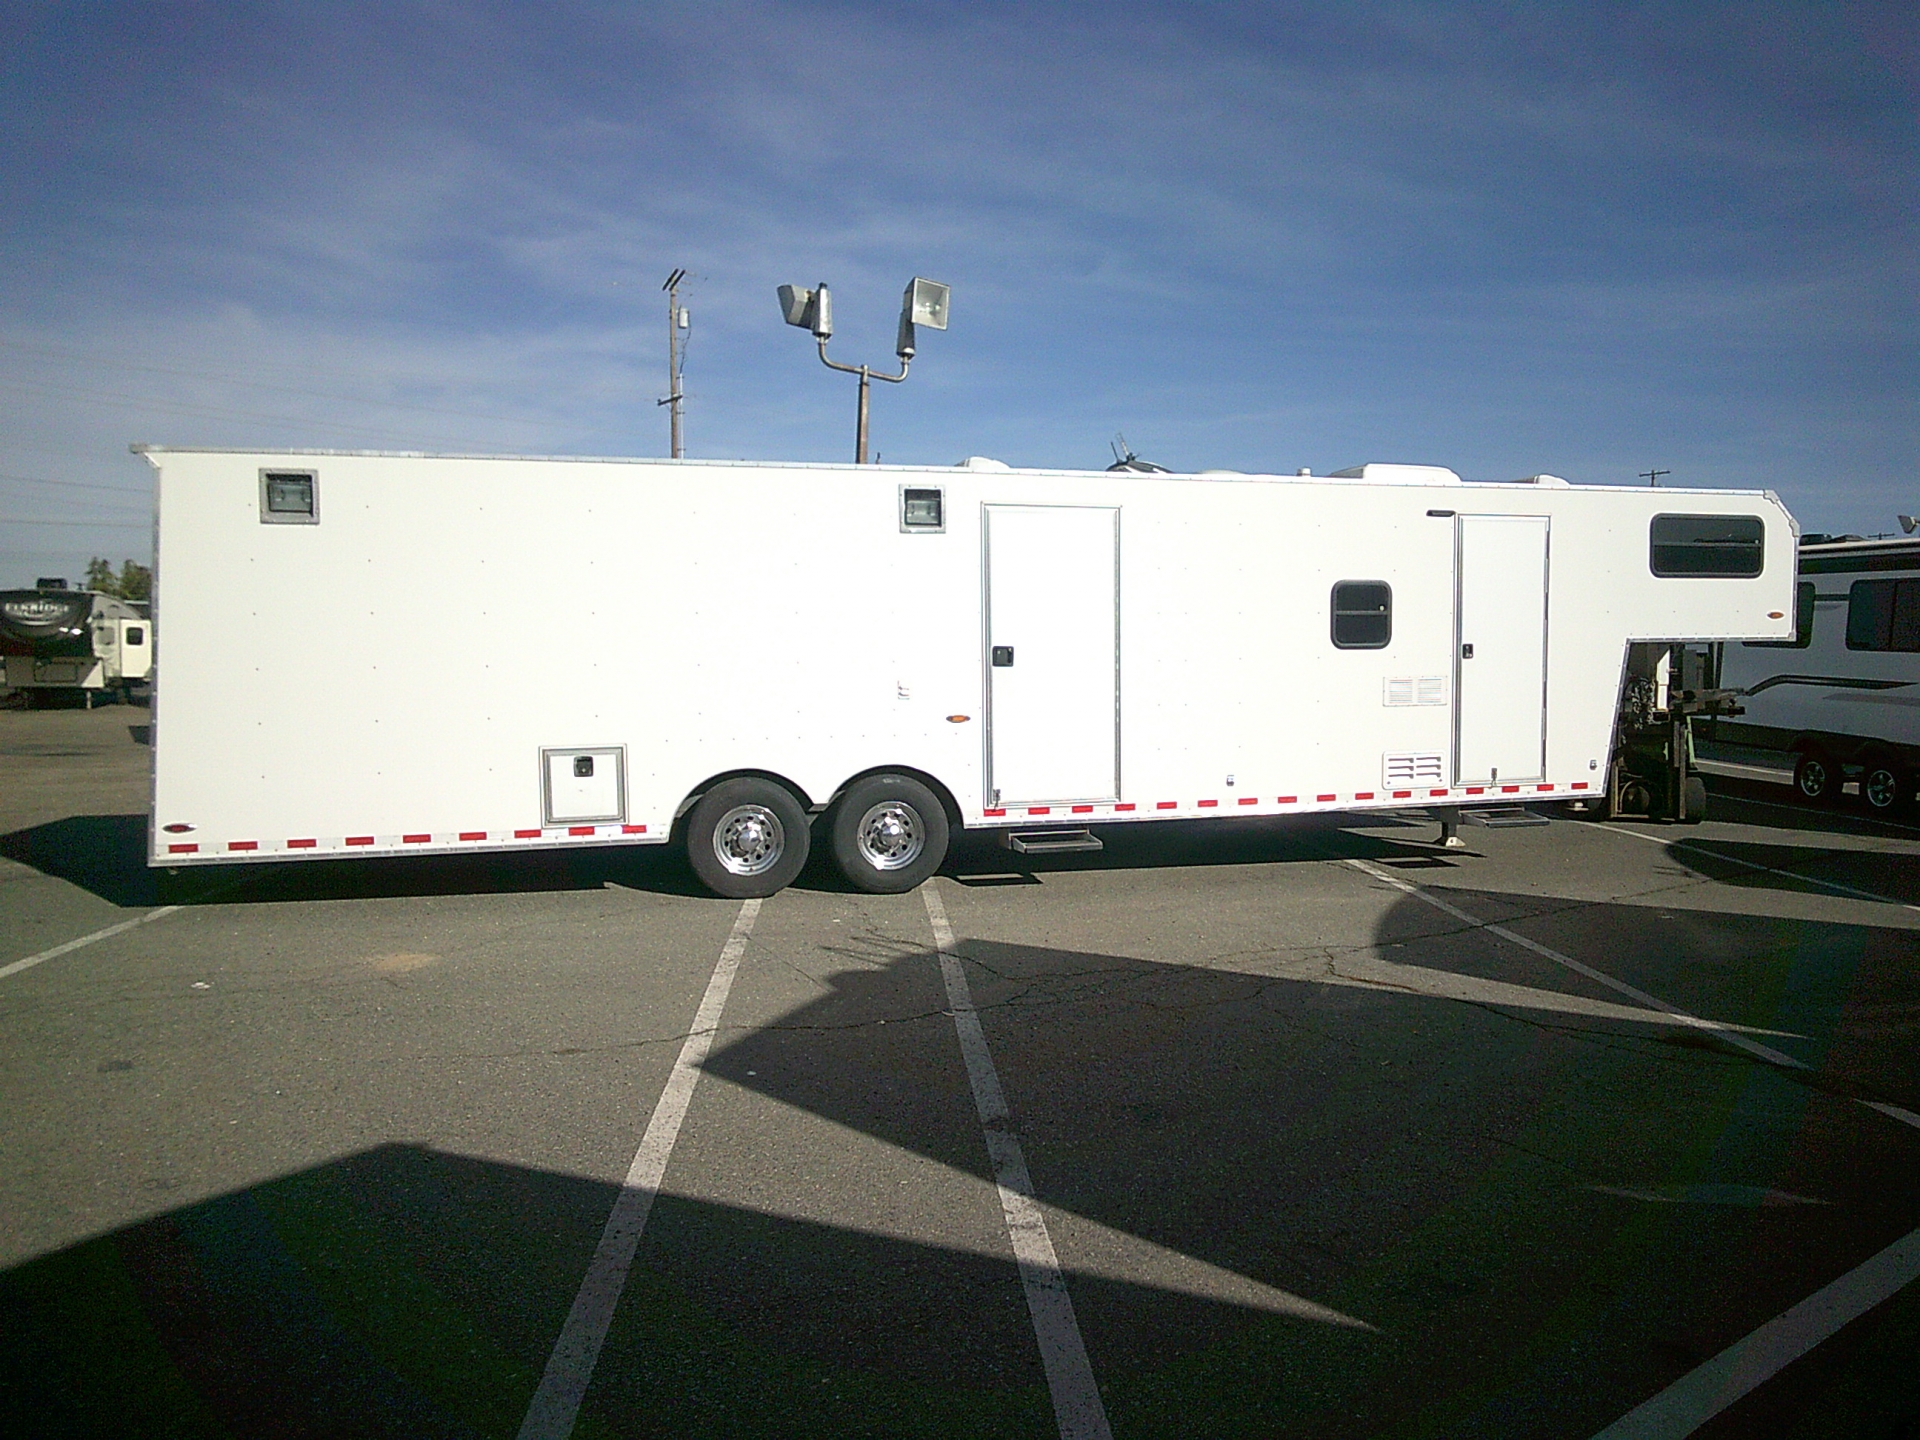 2008 TPD Racecar trailer Vortech with living quarters